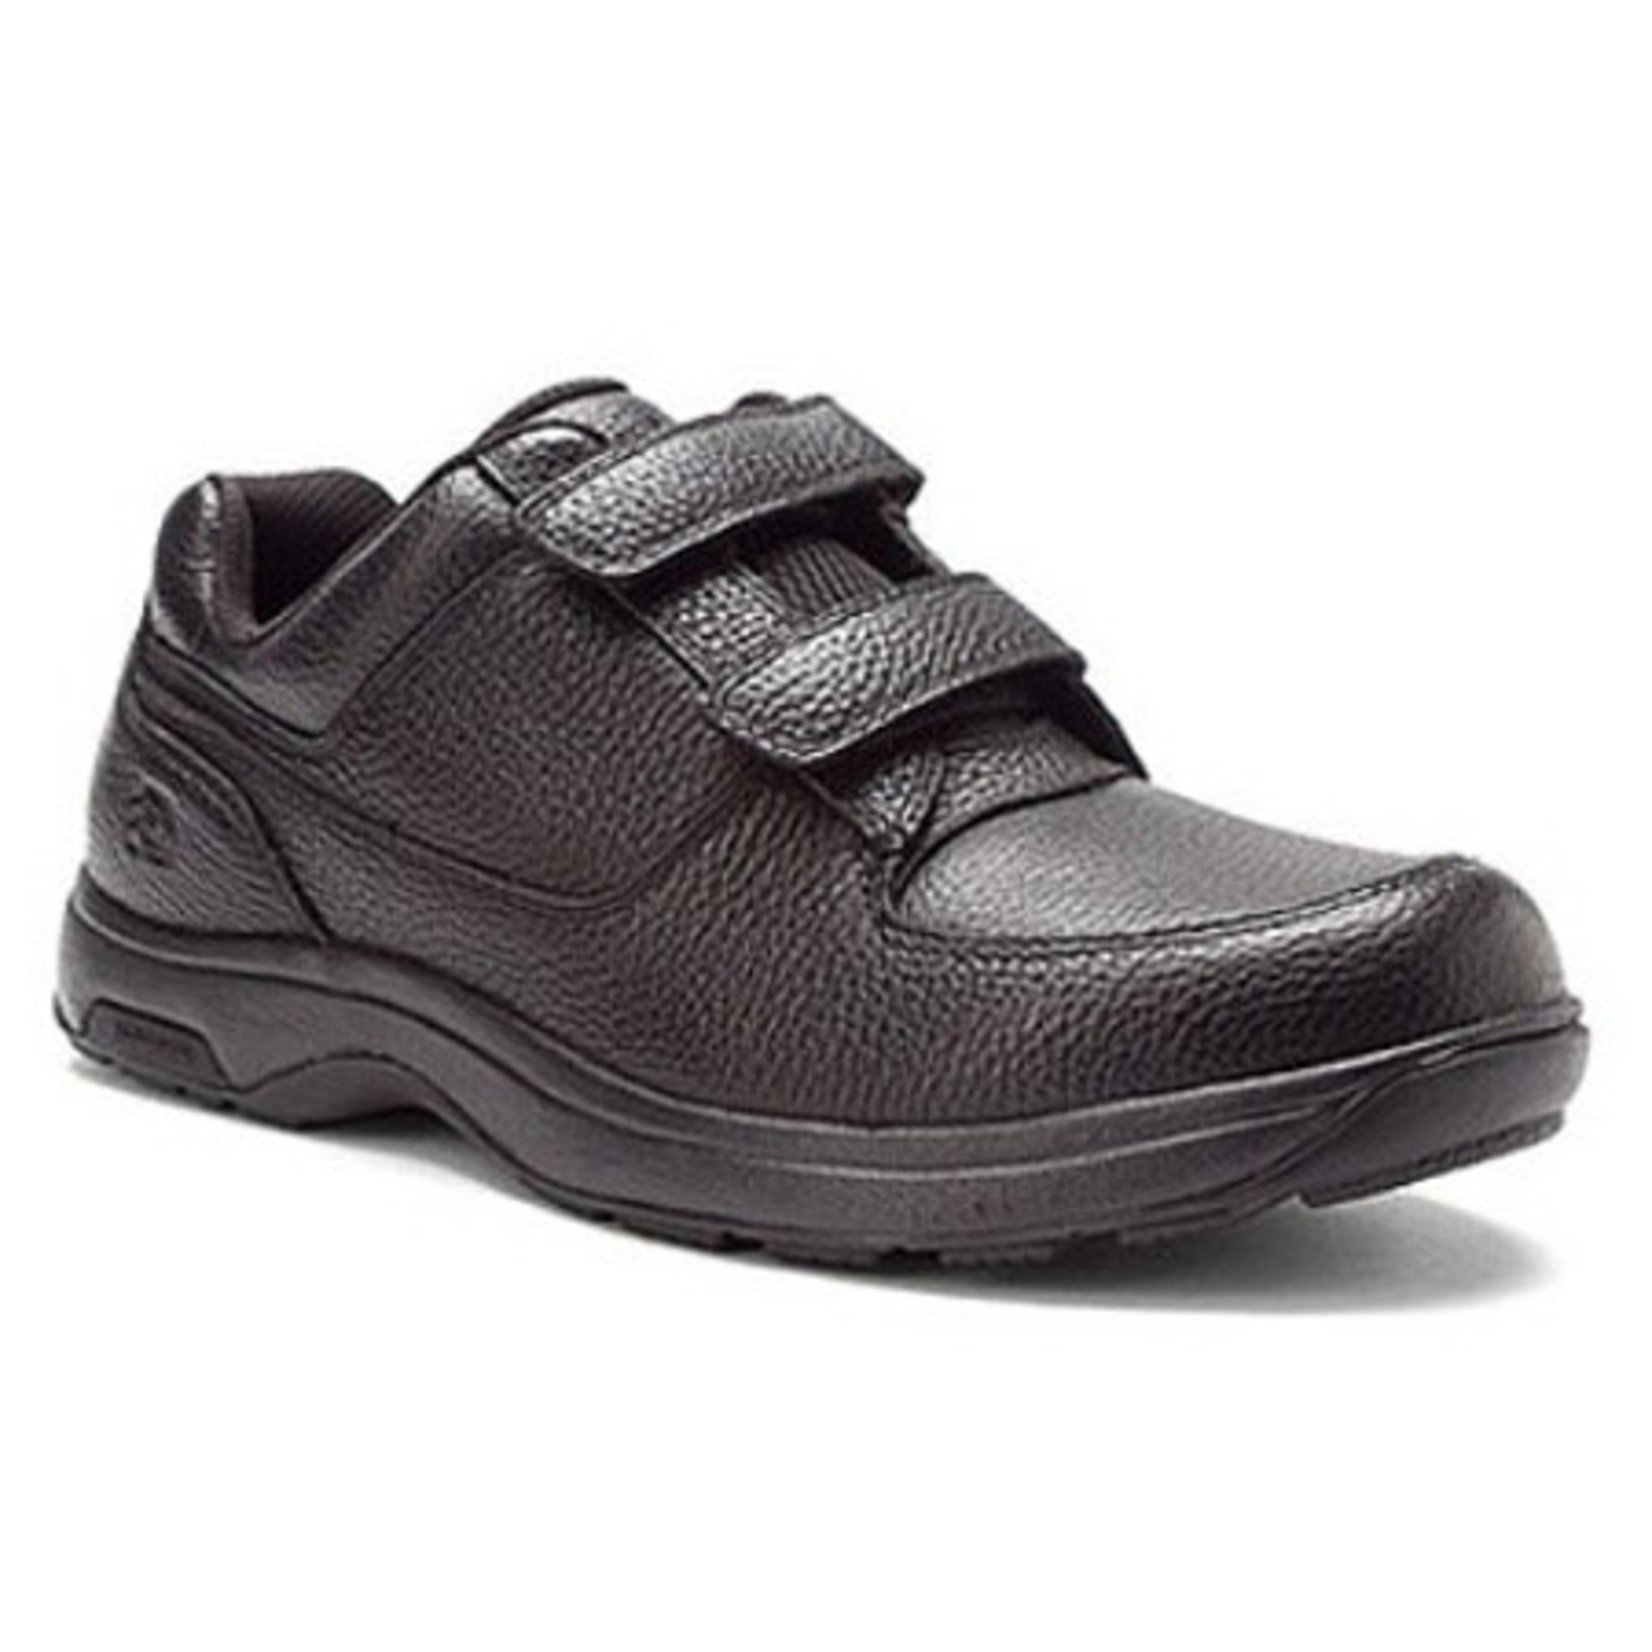 Dunham Winslow Velcro Men’s Casual Shoes - Shippy Shoes